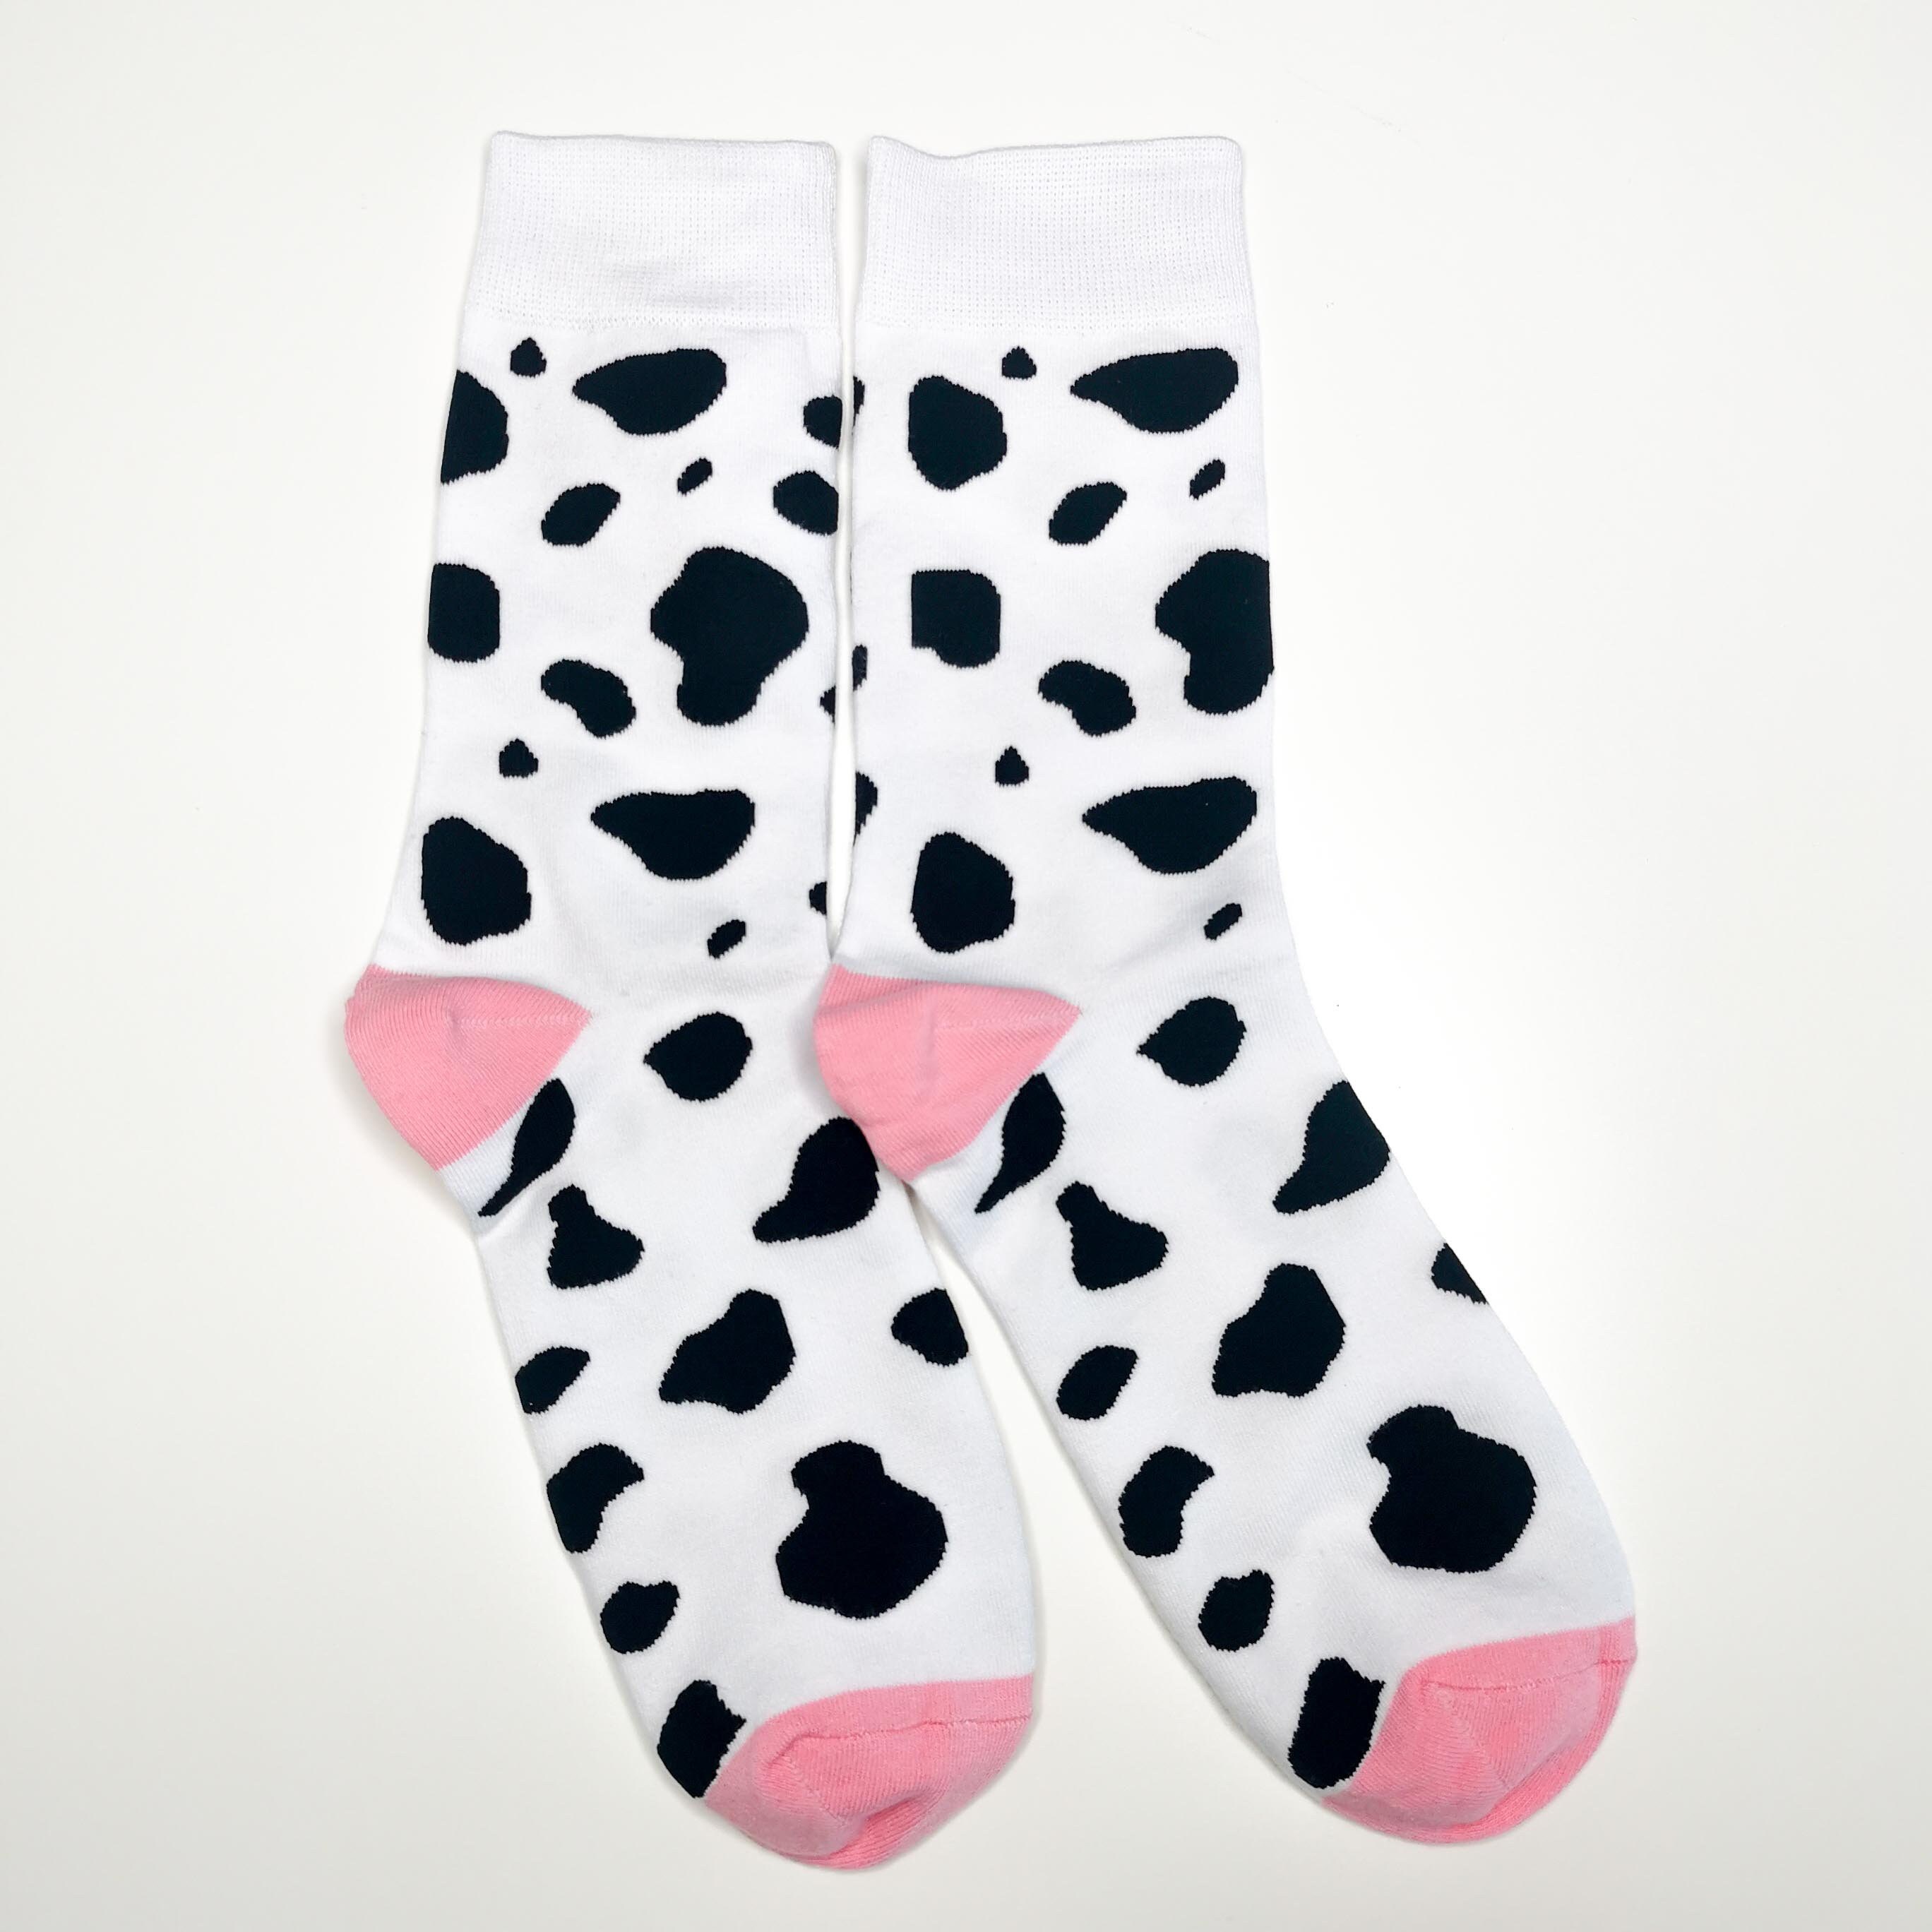 Cow Spots Socks | Adult UK Size 4-8.5 Cute Animal, Bright Unisex